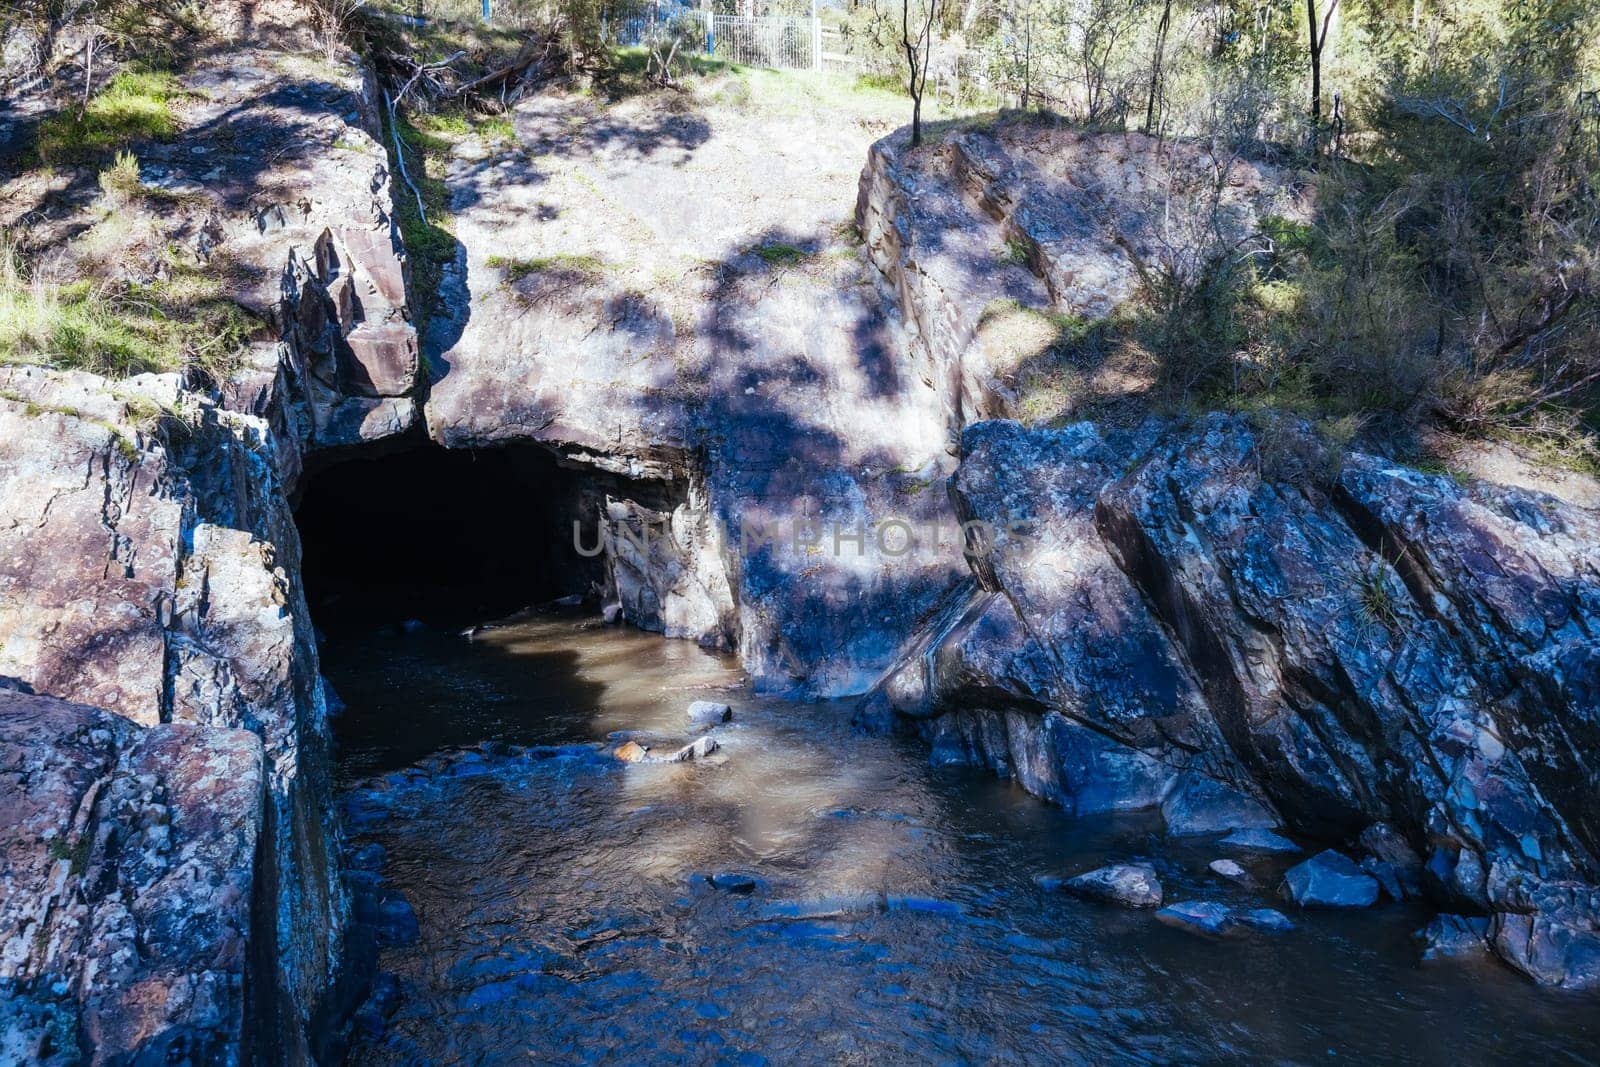 Pound Bend Tunnel in Melbourne Australia by FiledIMAGE